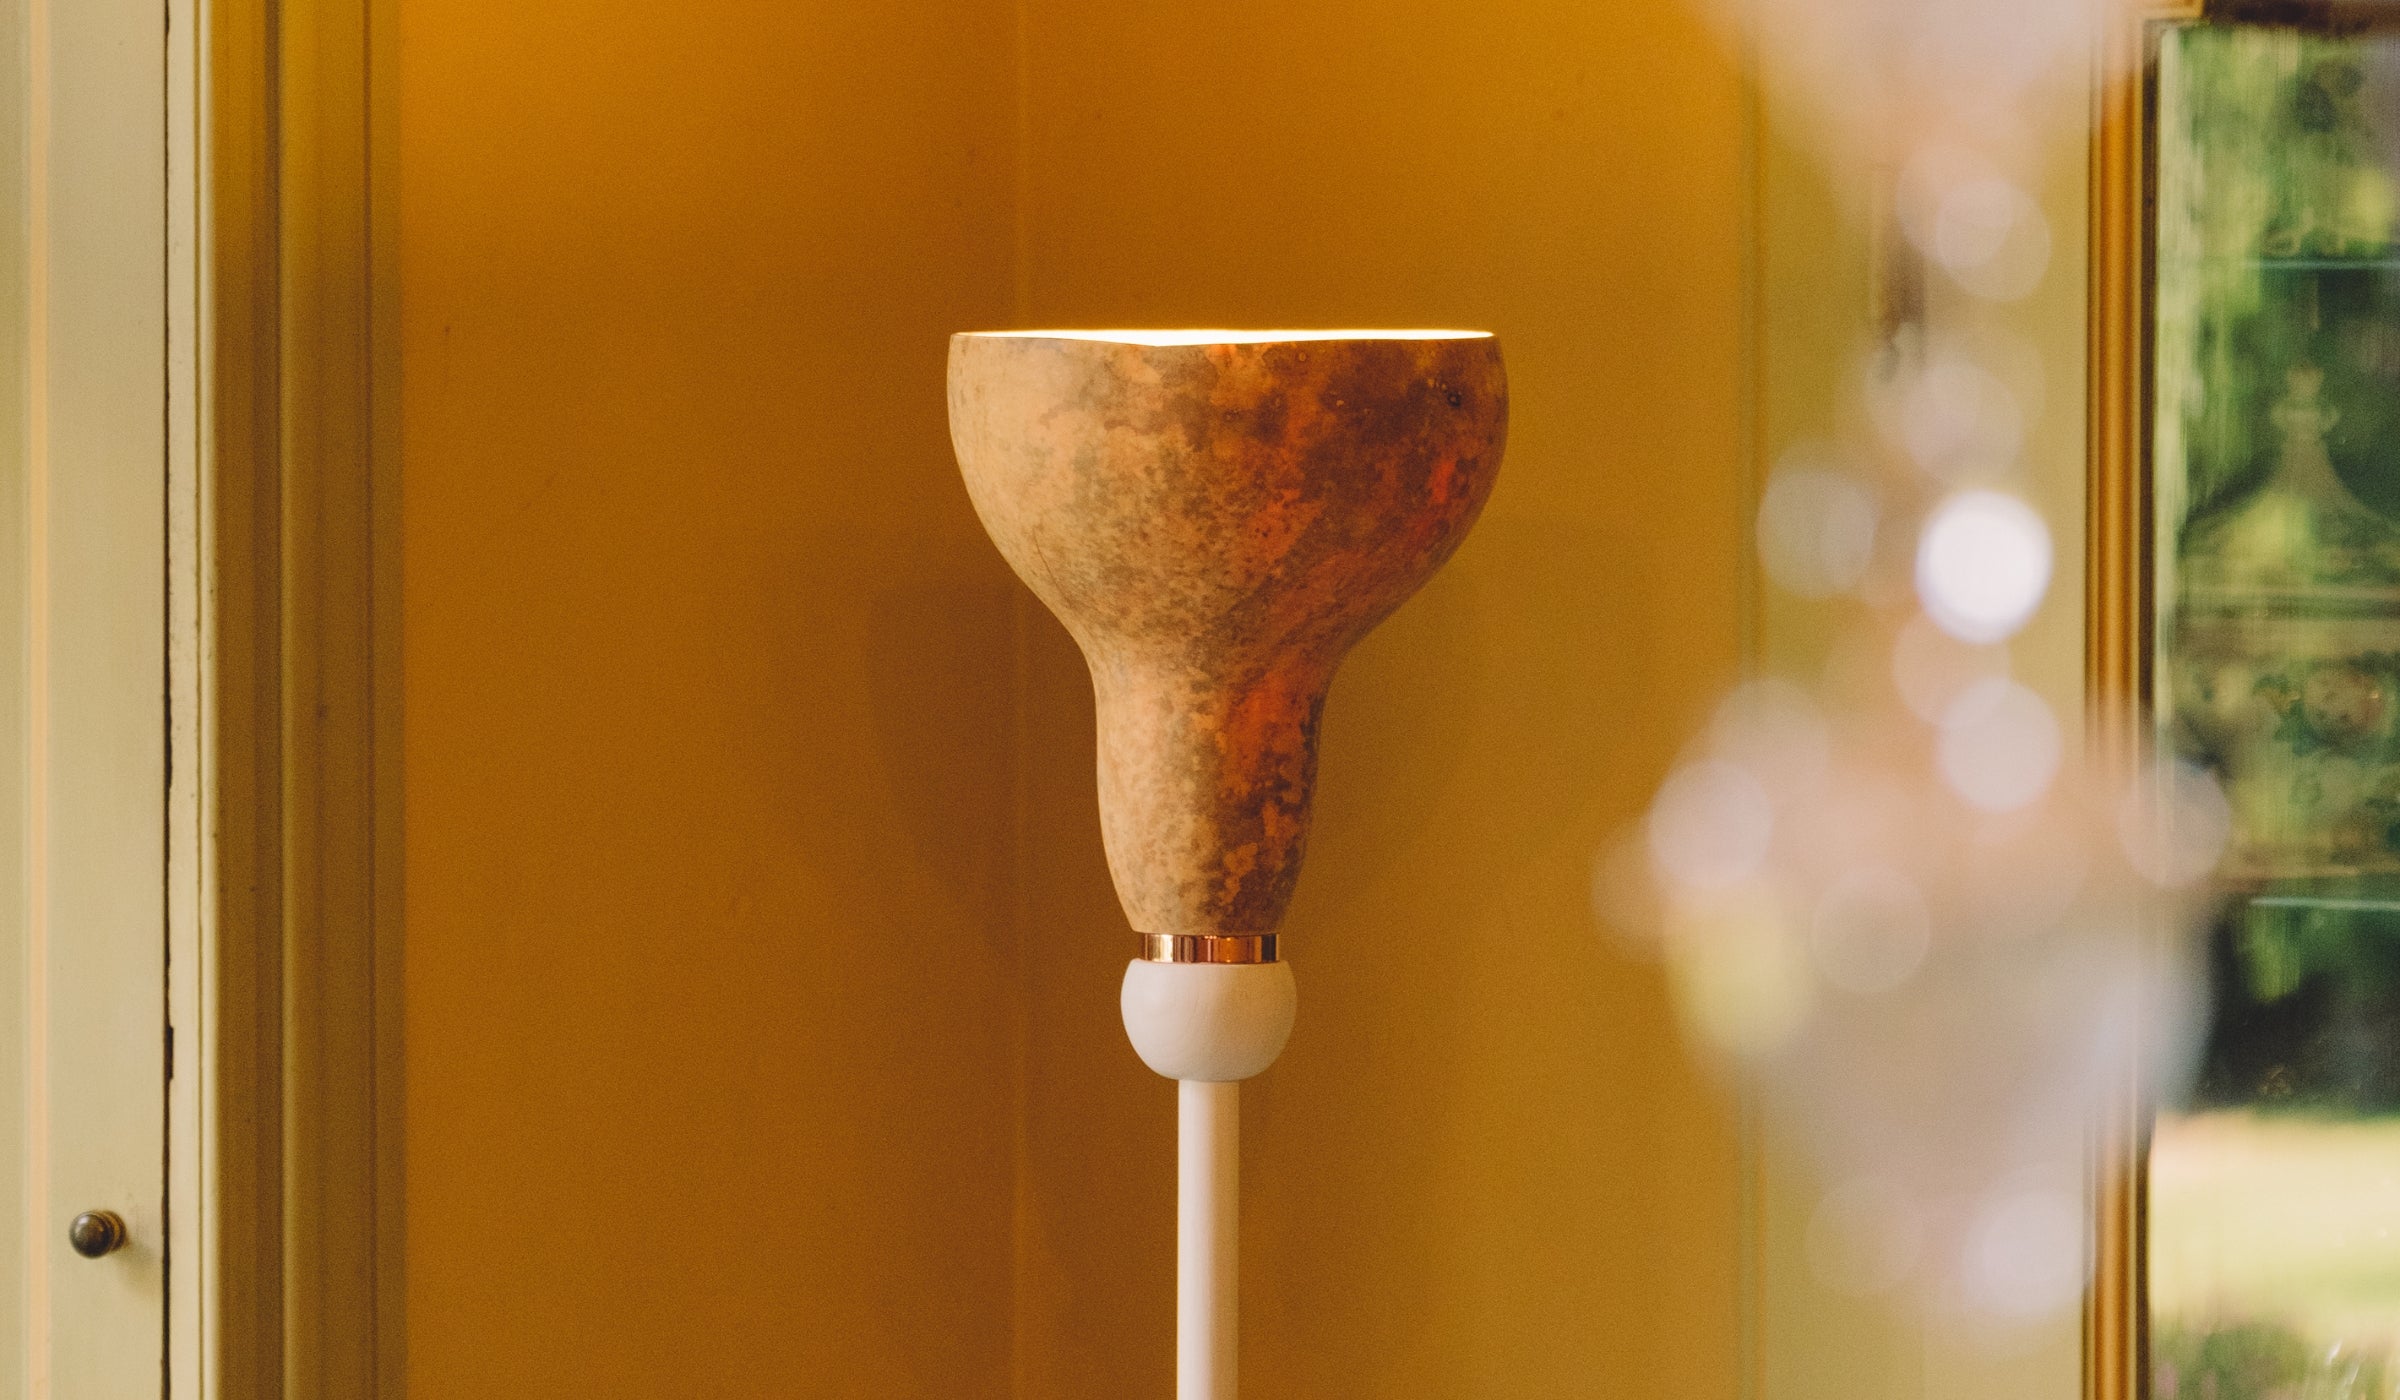 Tulip - Floor lamp, pumpkin lampshade and ash finish, copper white